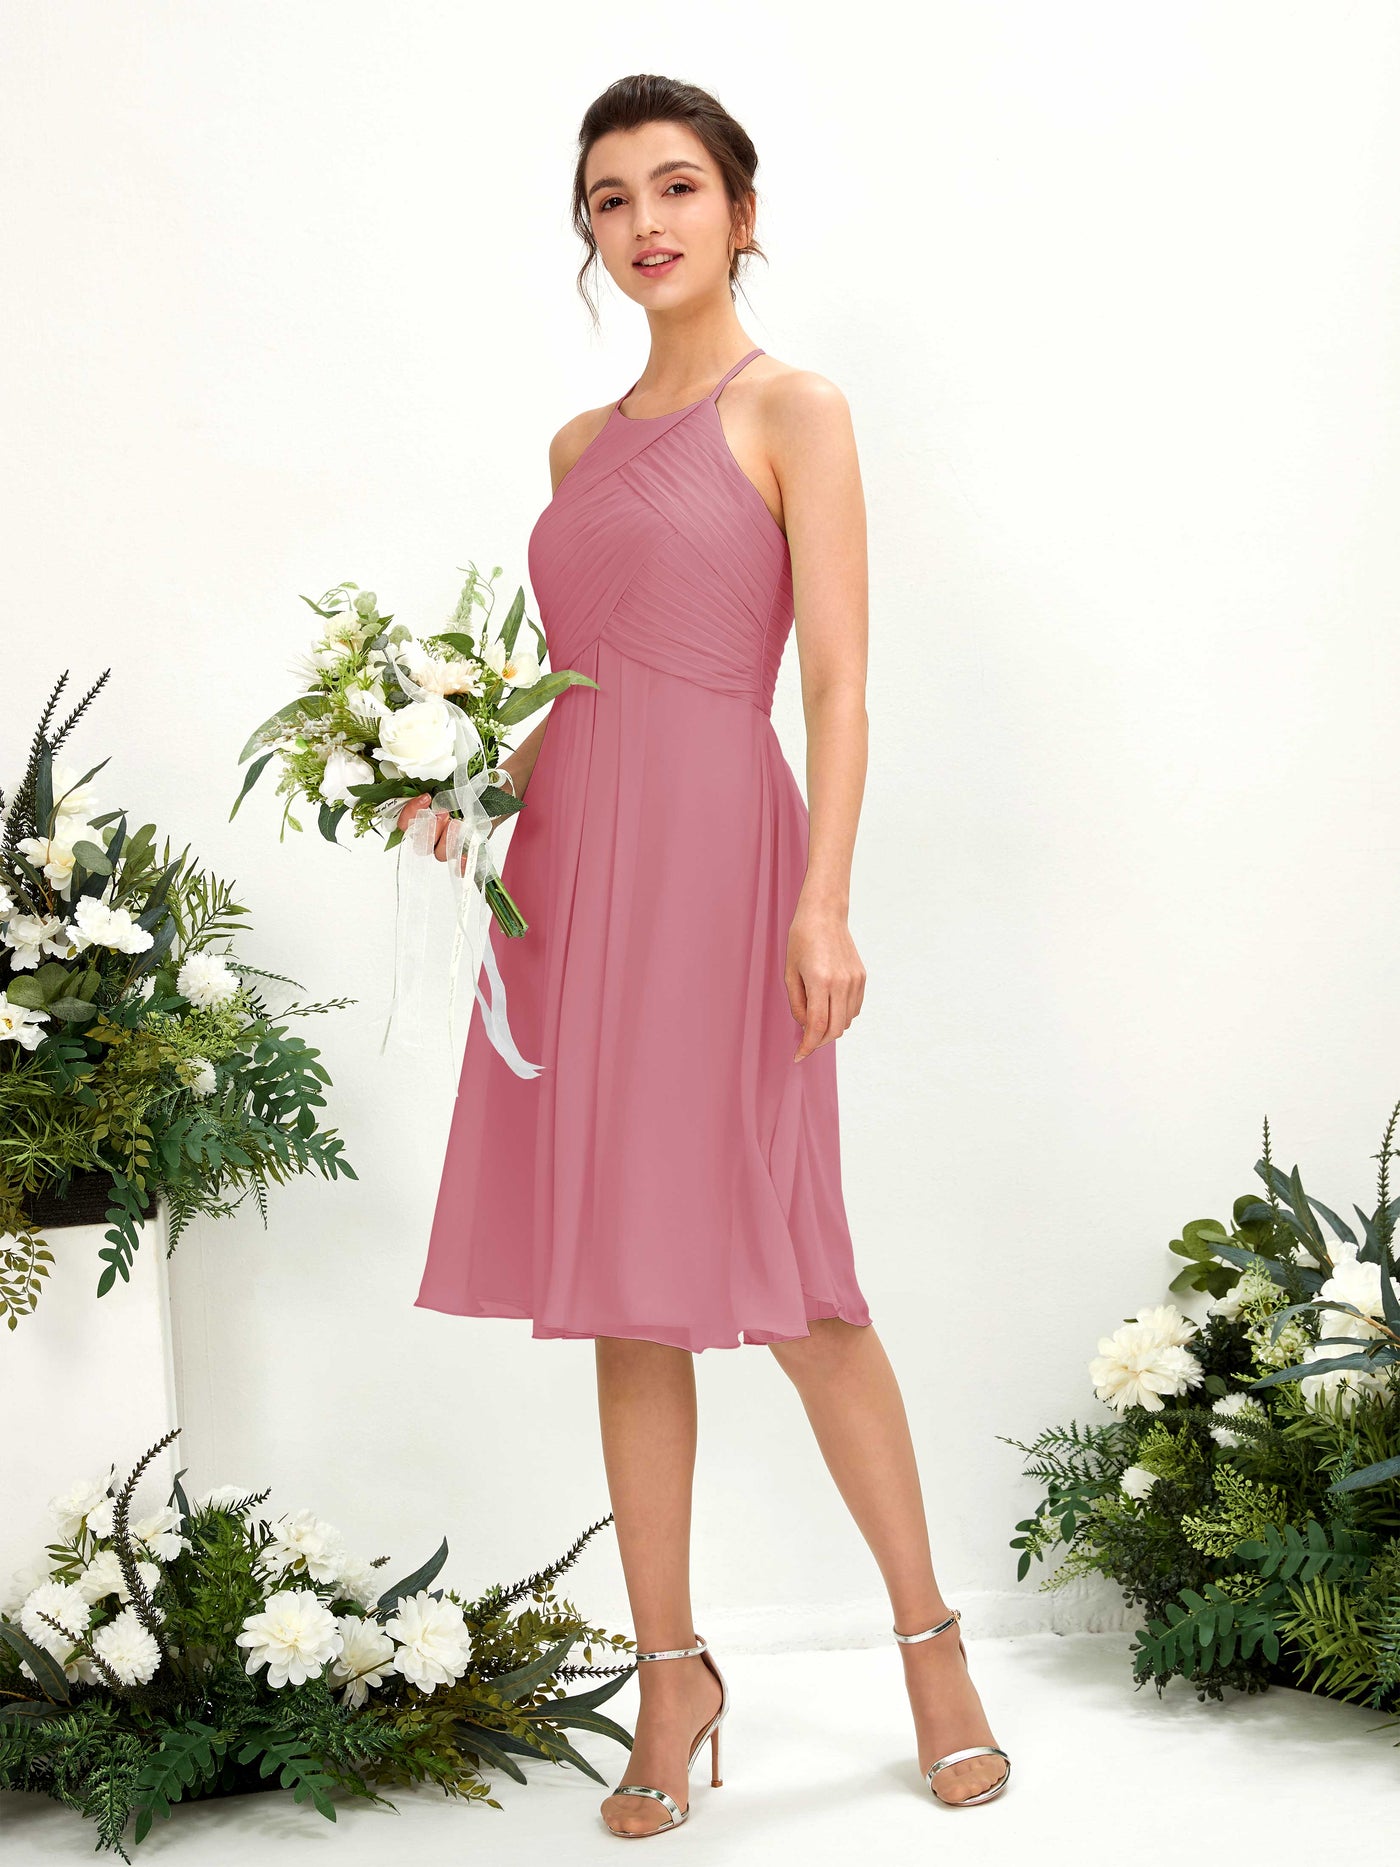 Desert Rose Bridesmaid Dresses Bridesmaid Dress A-line Chiffon Halter Knee Length Sleeveless Wedding Party Dress (81220411)#color_desert-rose